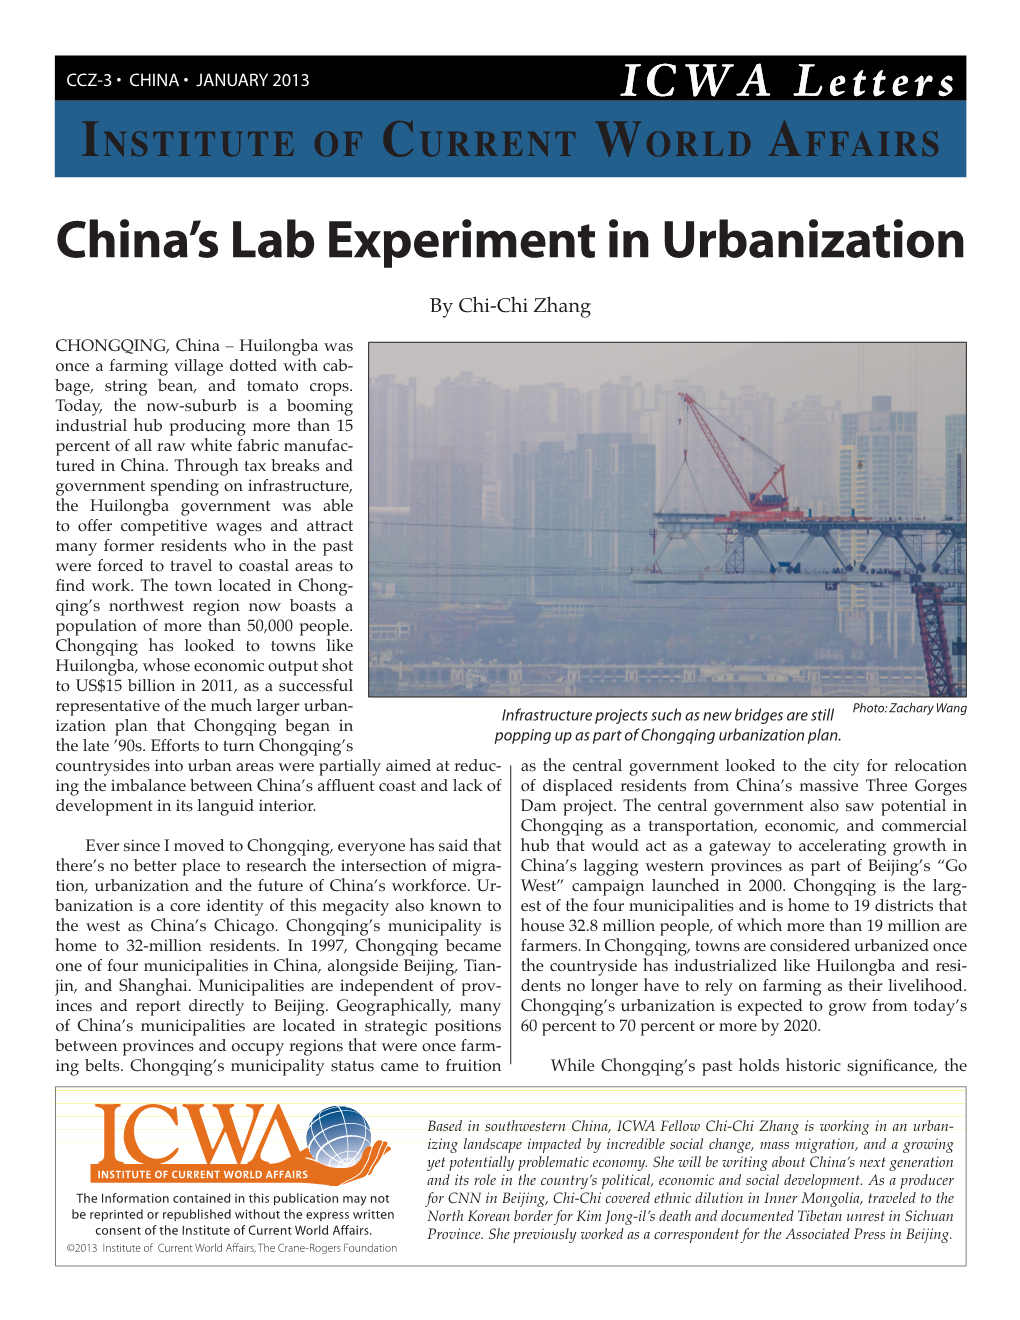 China's Lab Experiment in Urbanization